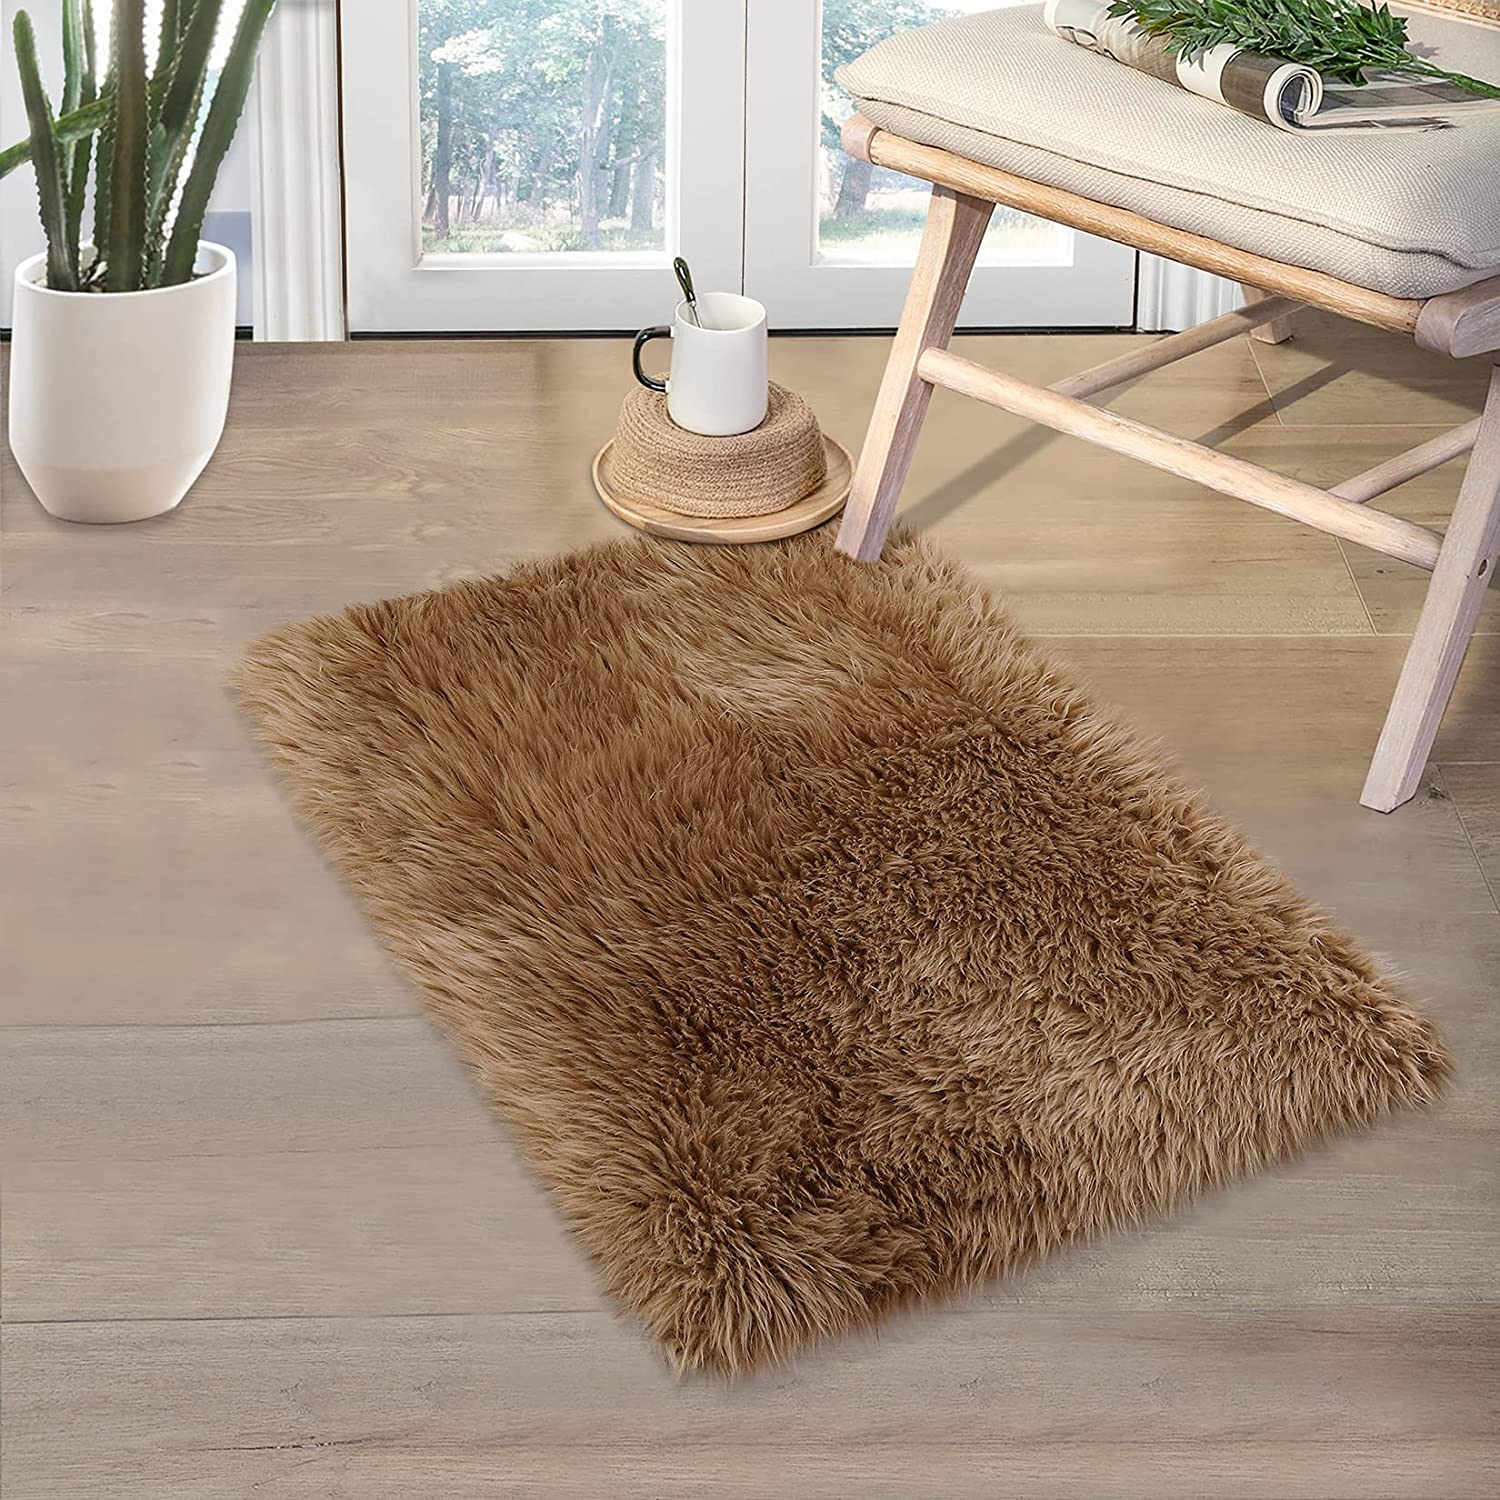 CAROMIO Fluffy Rugs Bedroom Furry Carpet